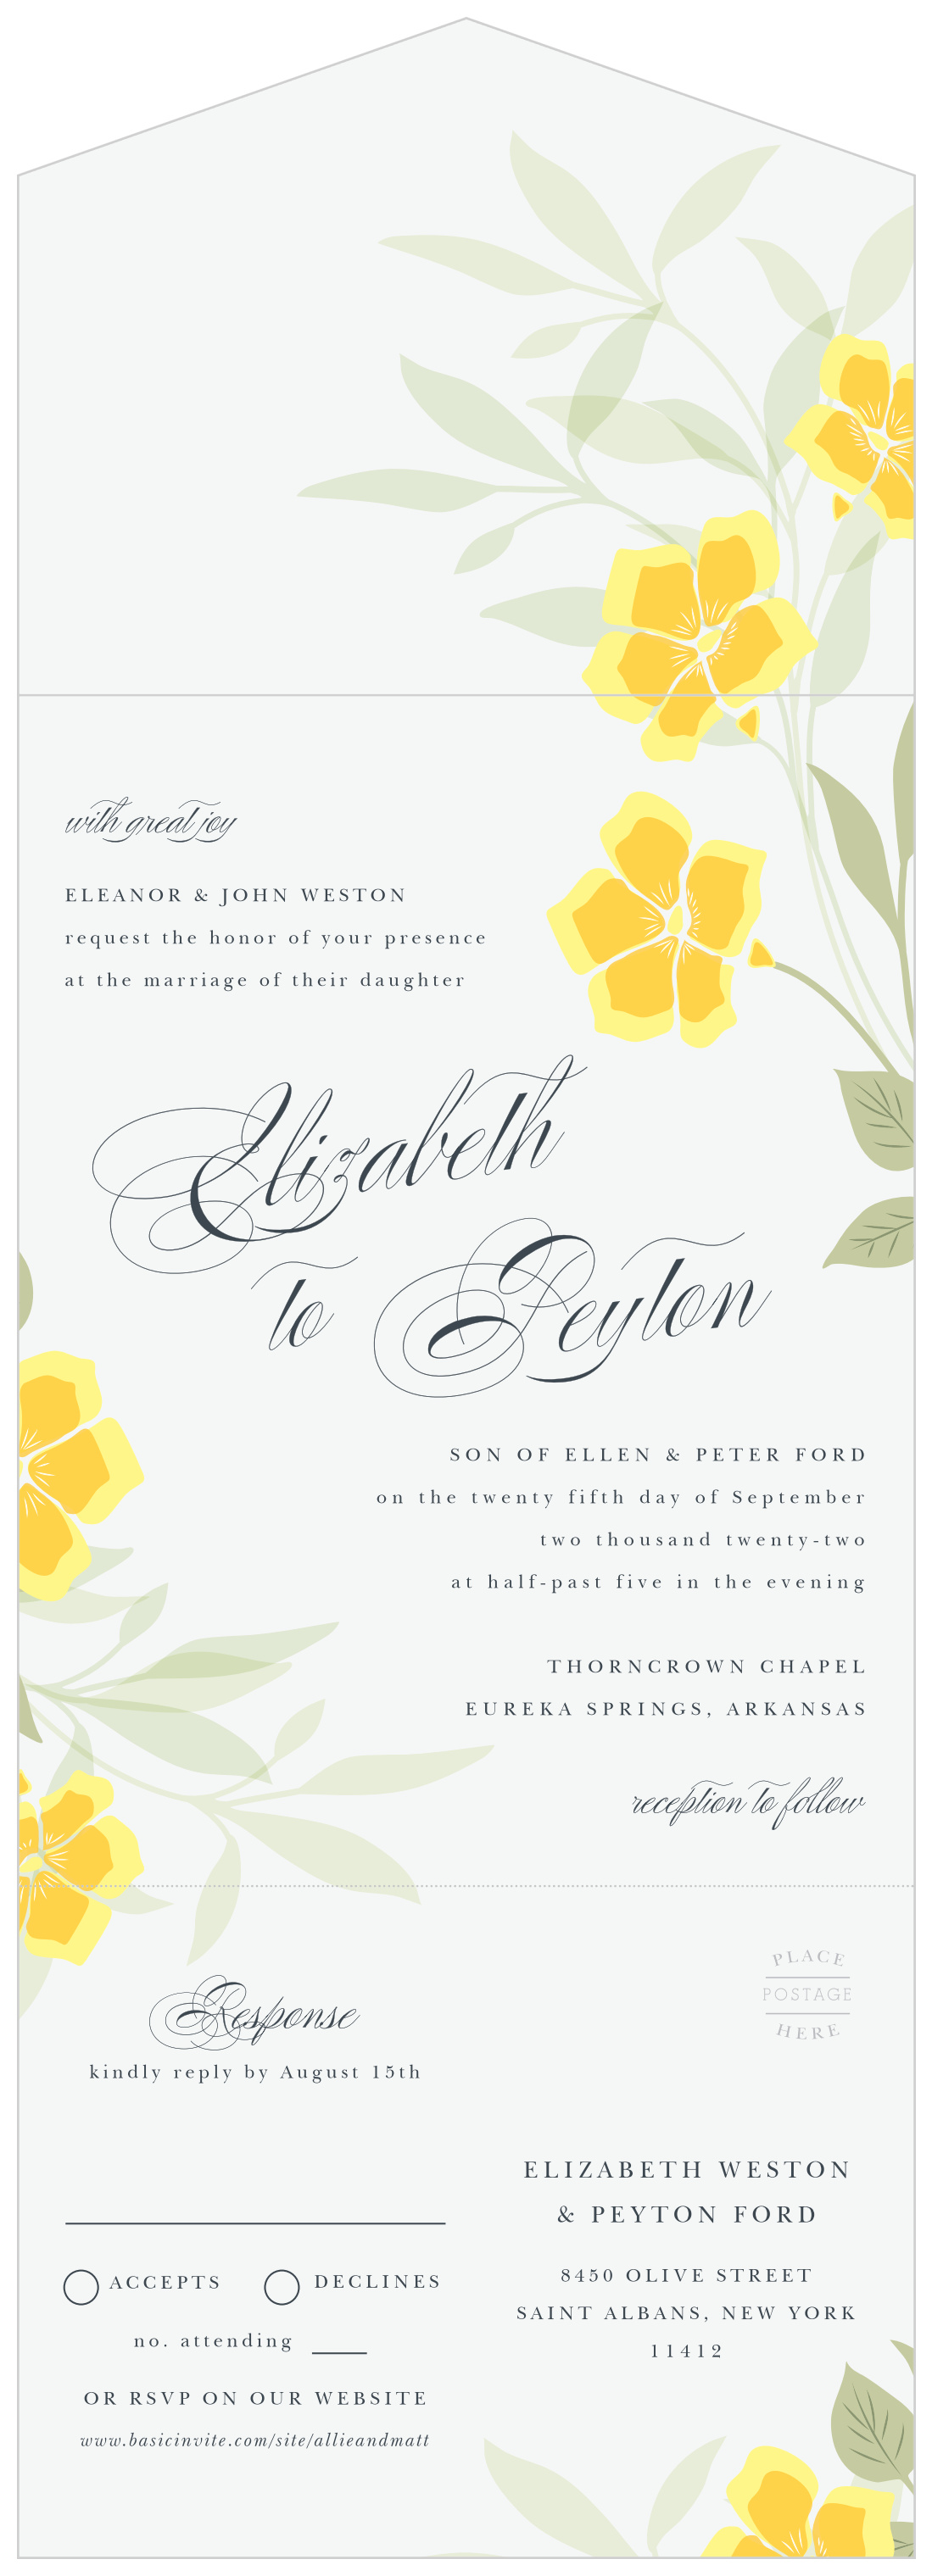 Clematis Blossom Seal & Send Wedding Invitations